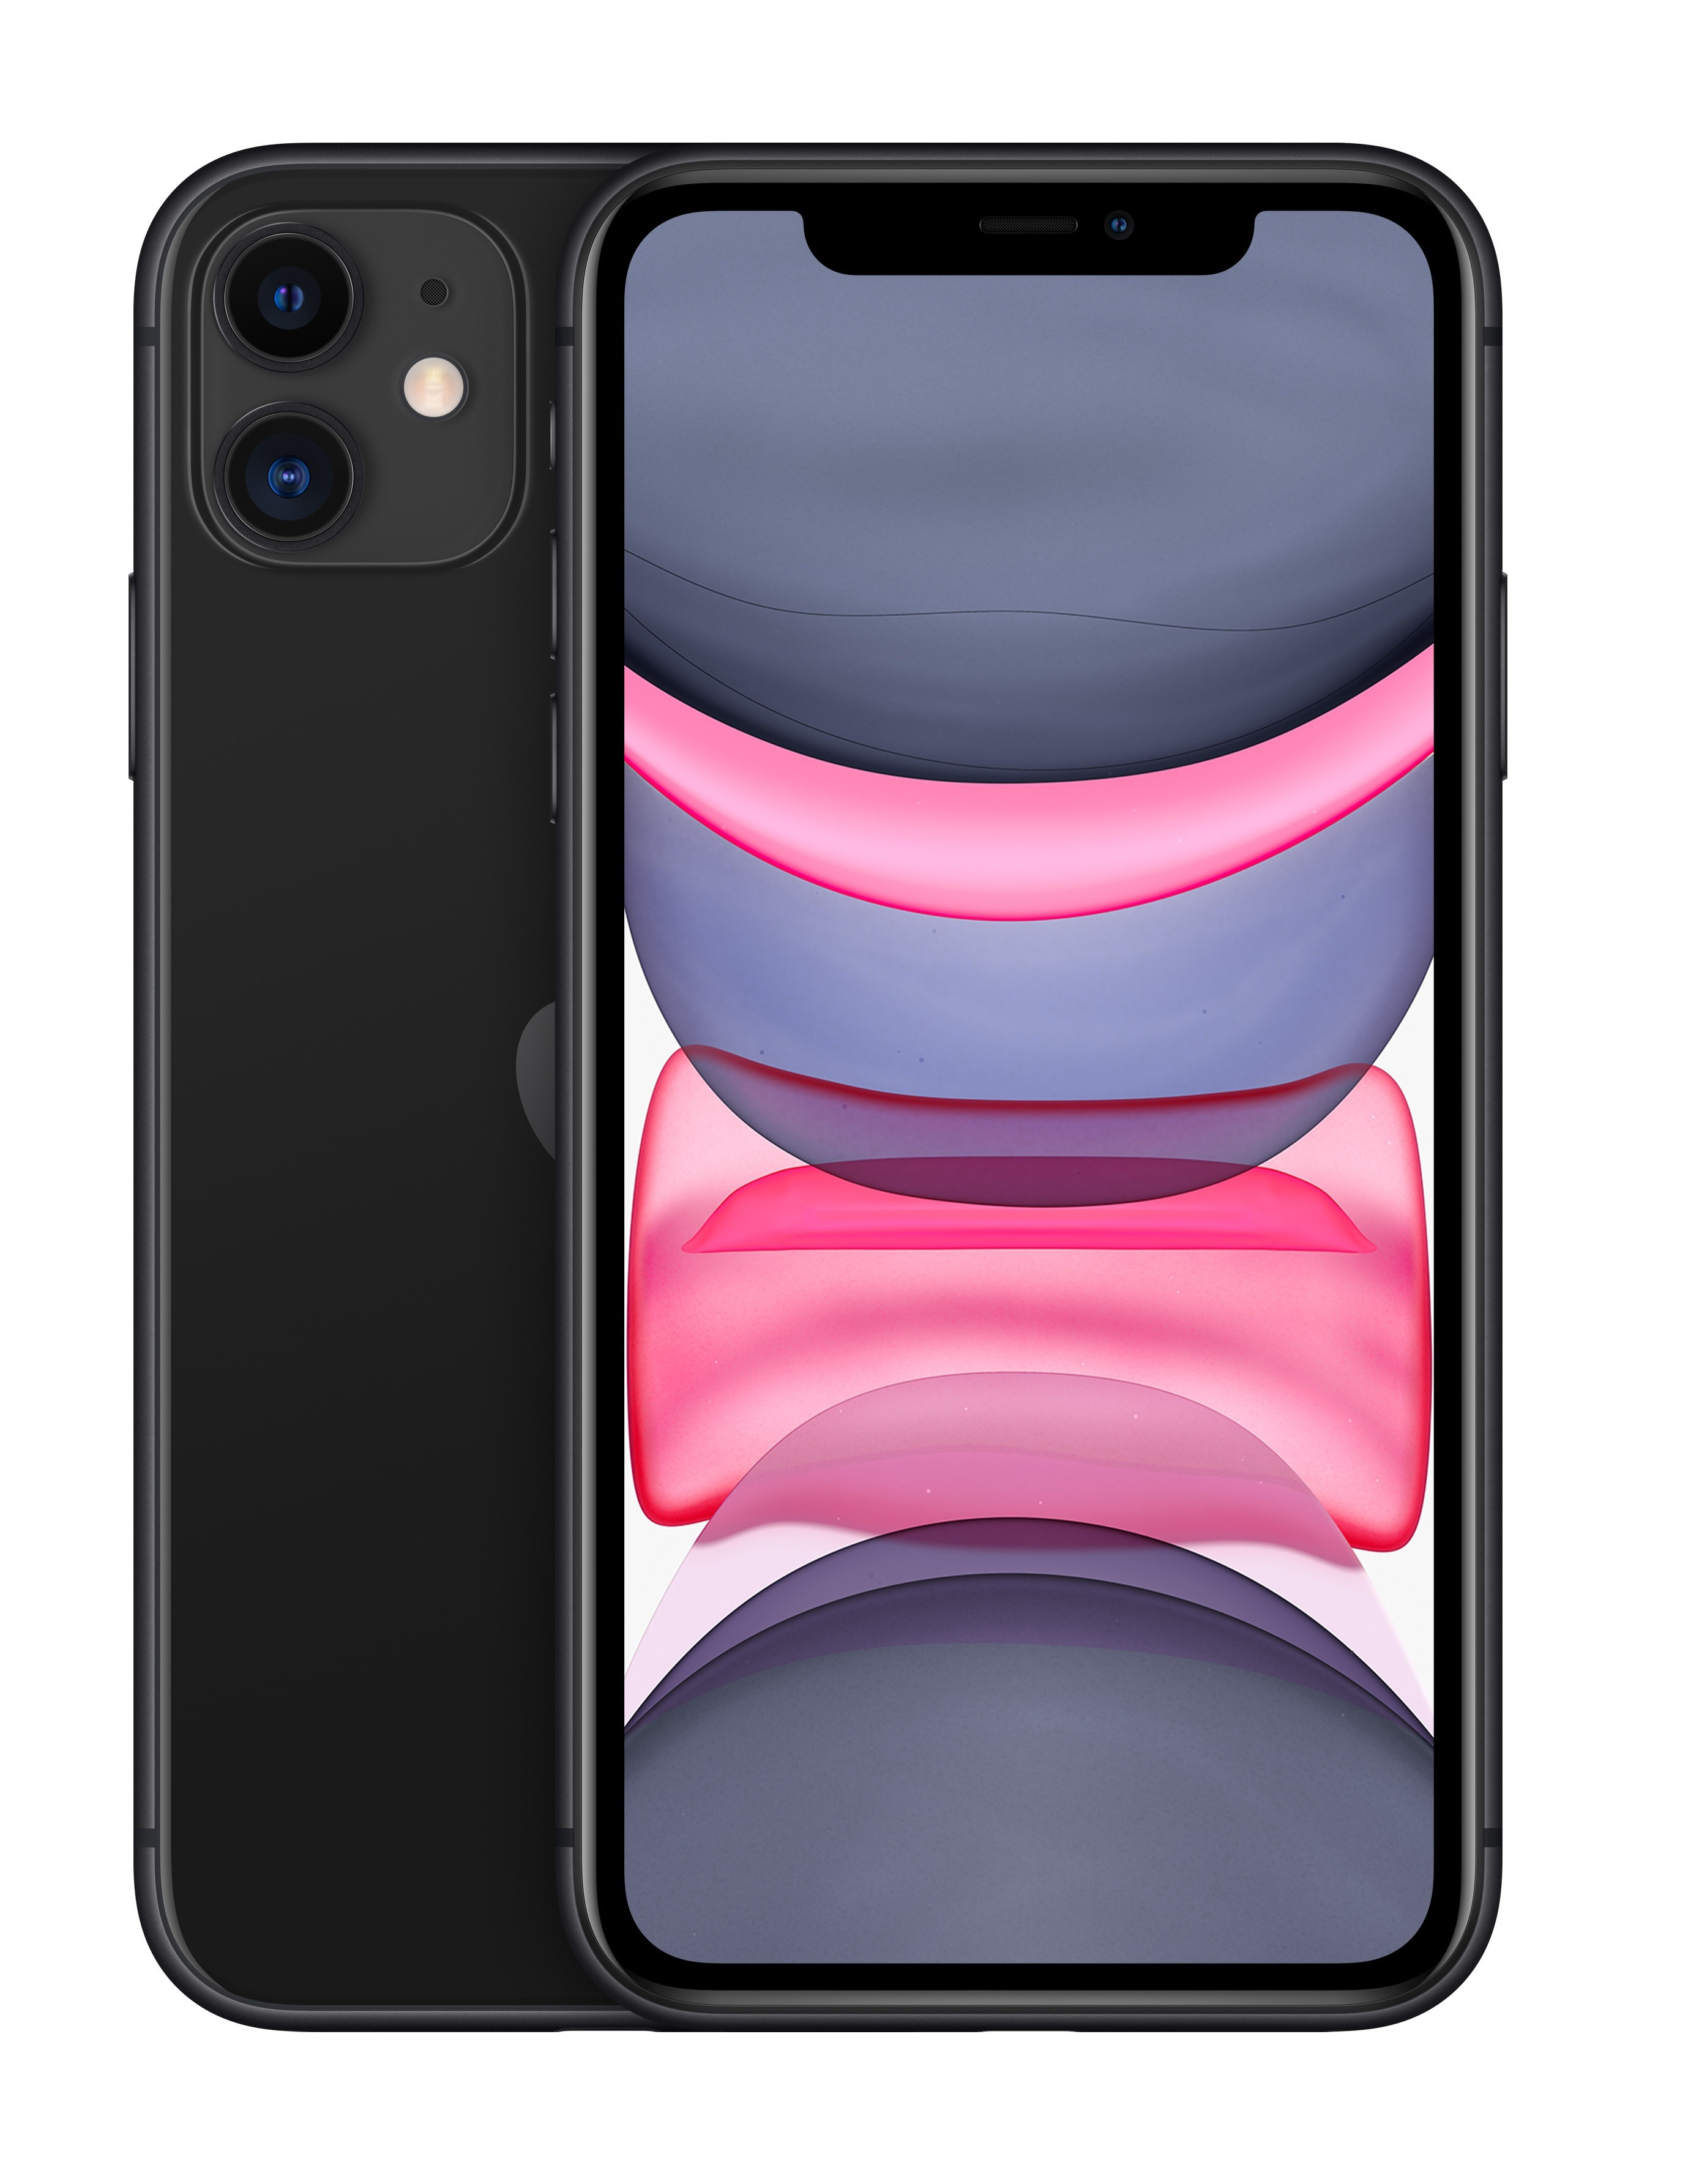 Apple iPhone 11 64GB (USB-A versie) Smartphone Zwart